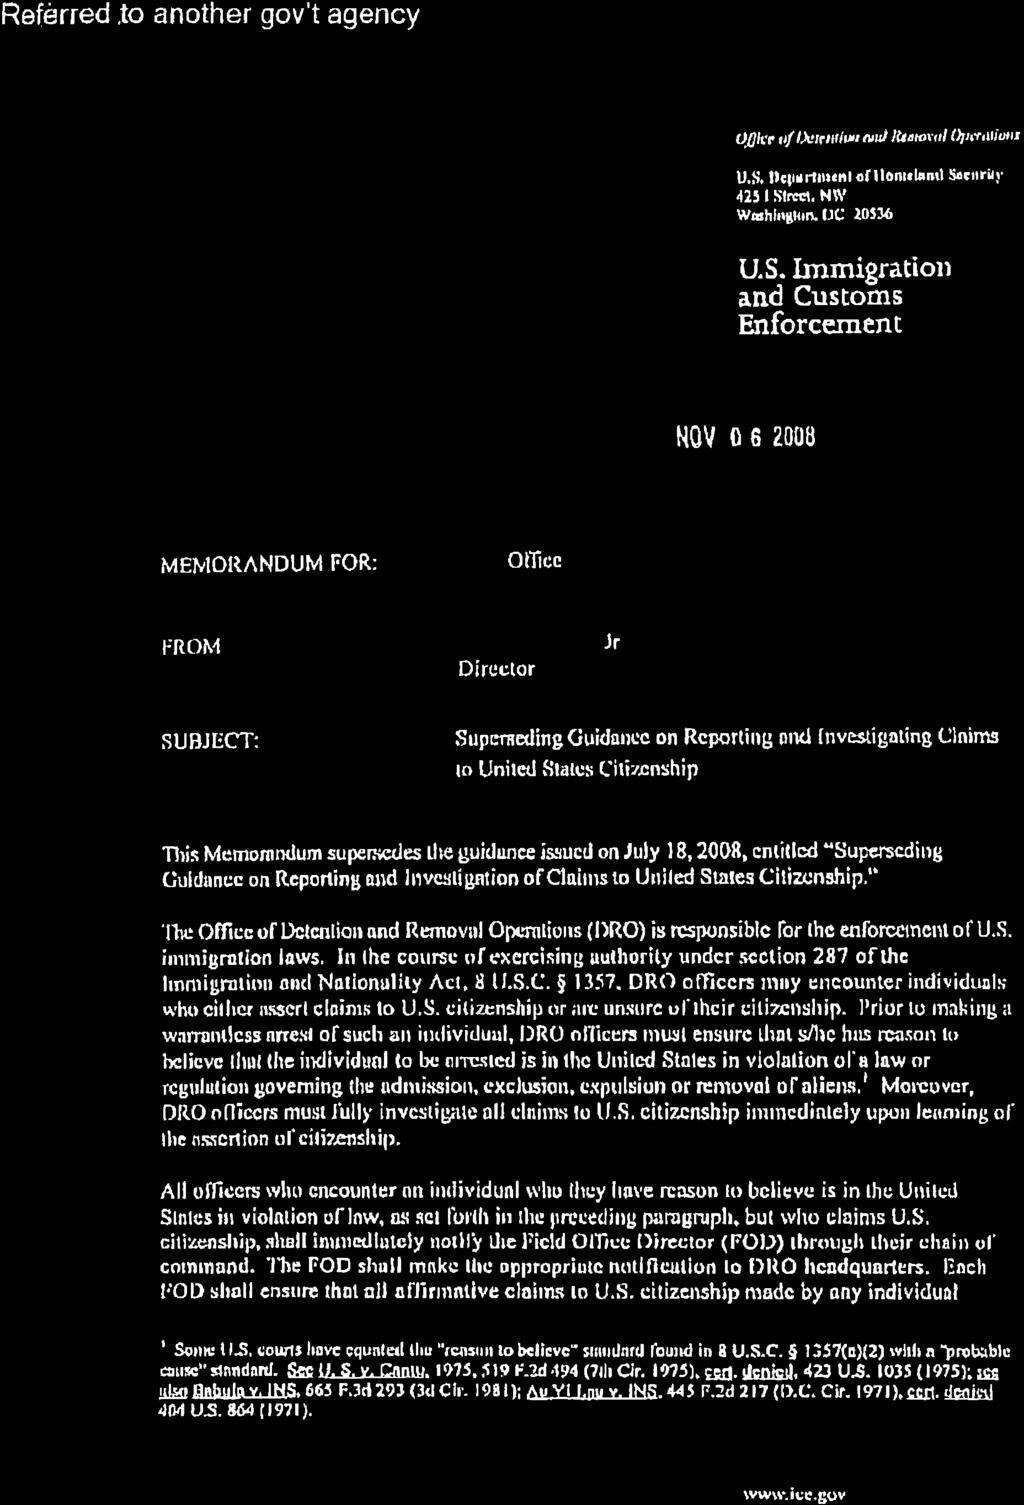 Case 1:14-cv-06459 Document 1-1